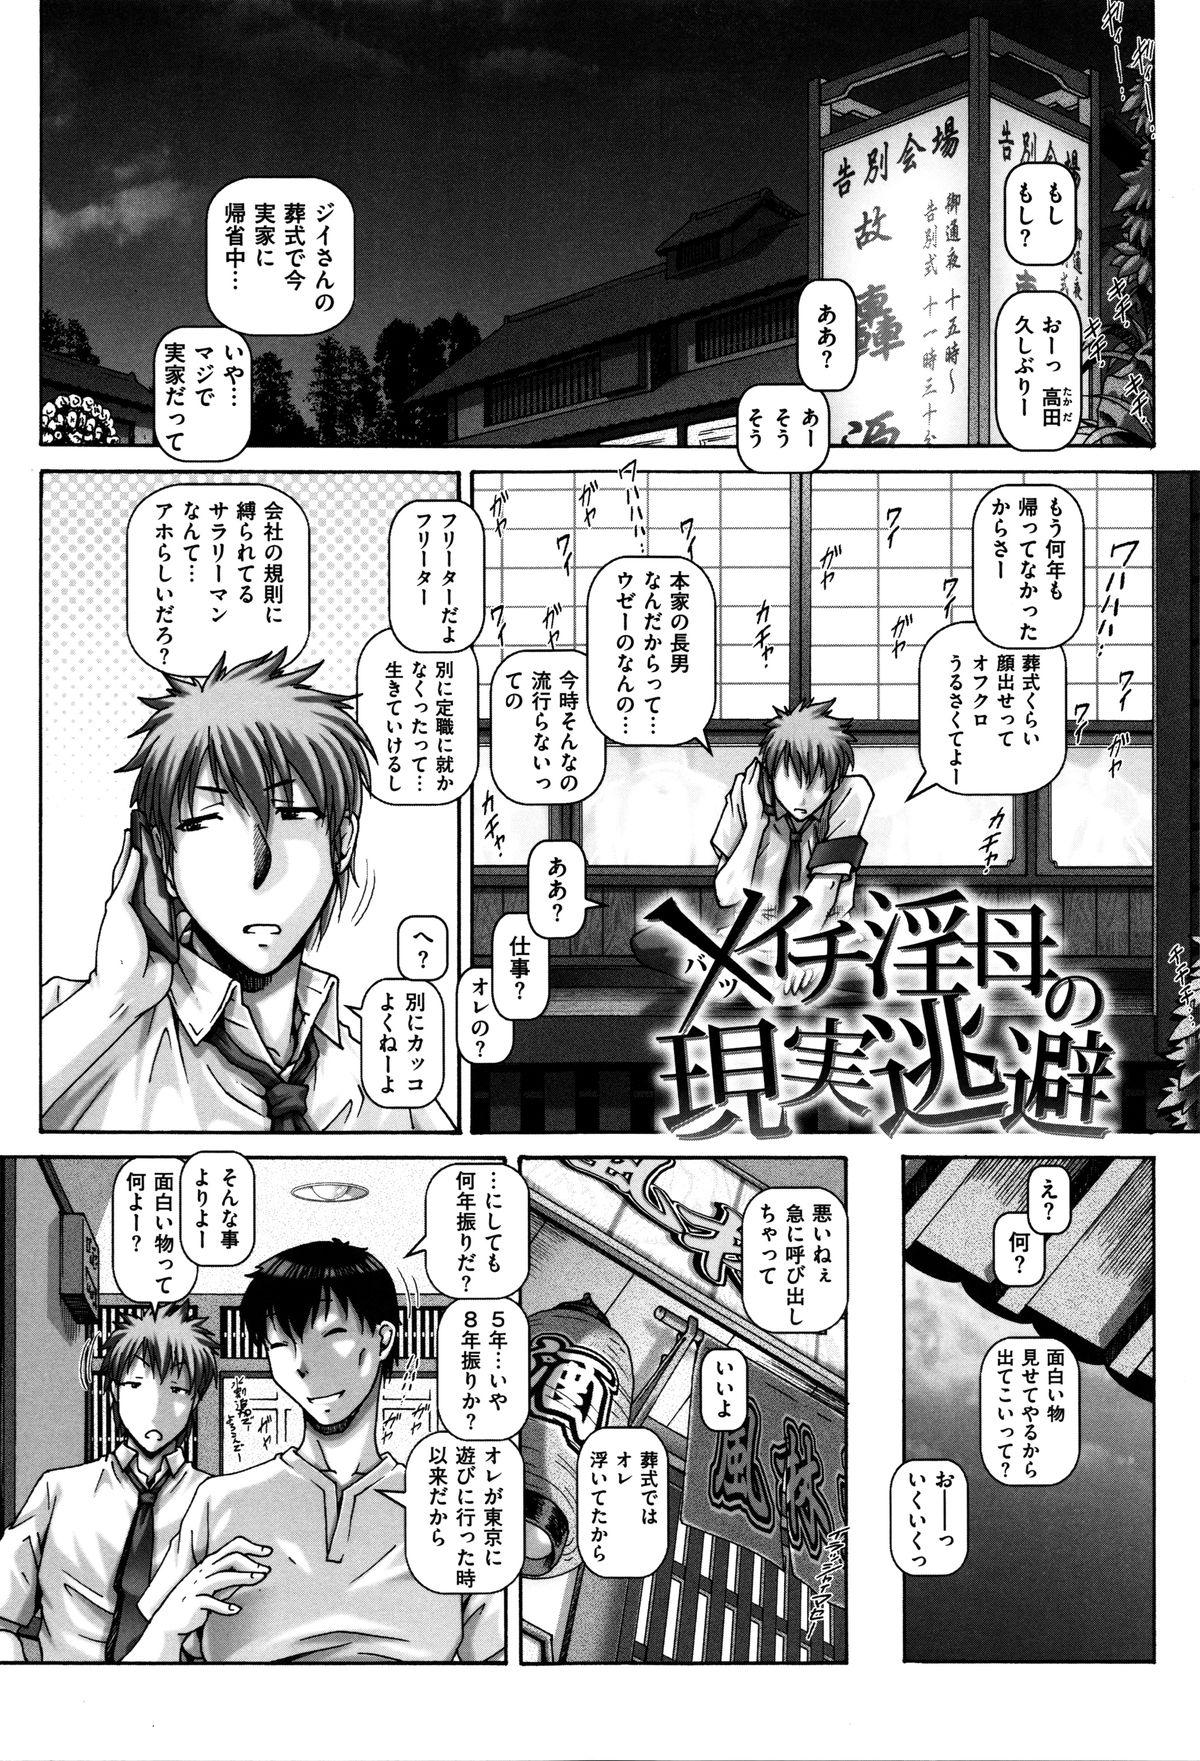 Semen Kachiku Ane - chapter 1,5,7 & 9 Action - Page 2